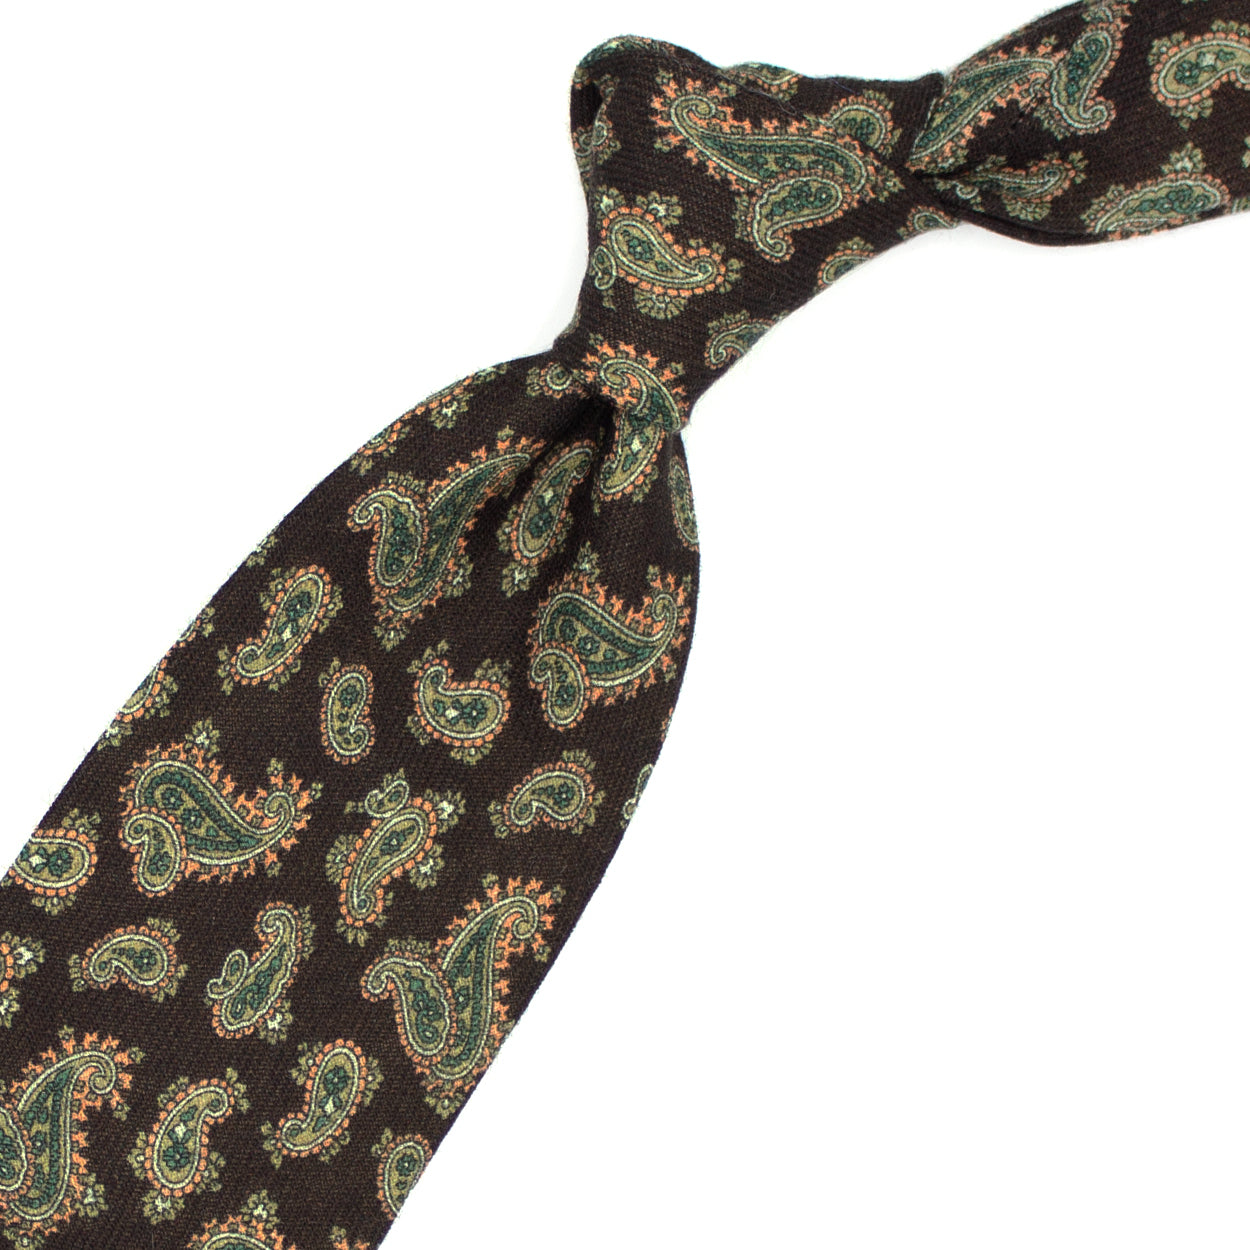 Cravatta marrone con paisley verdi